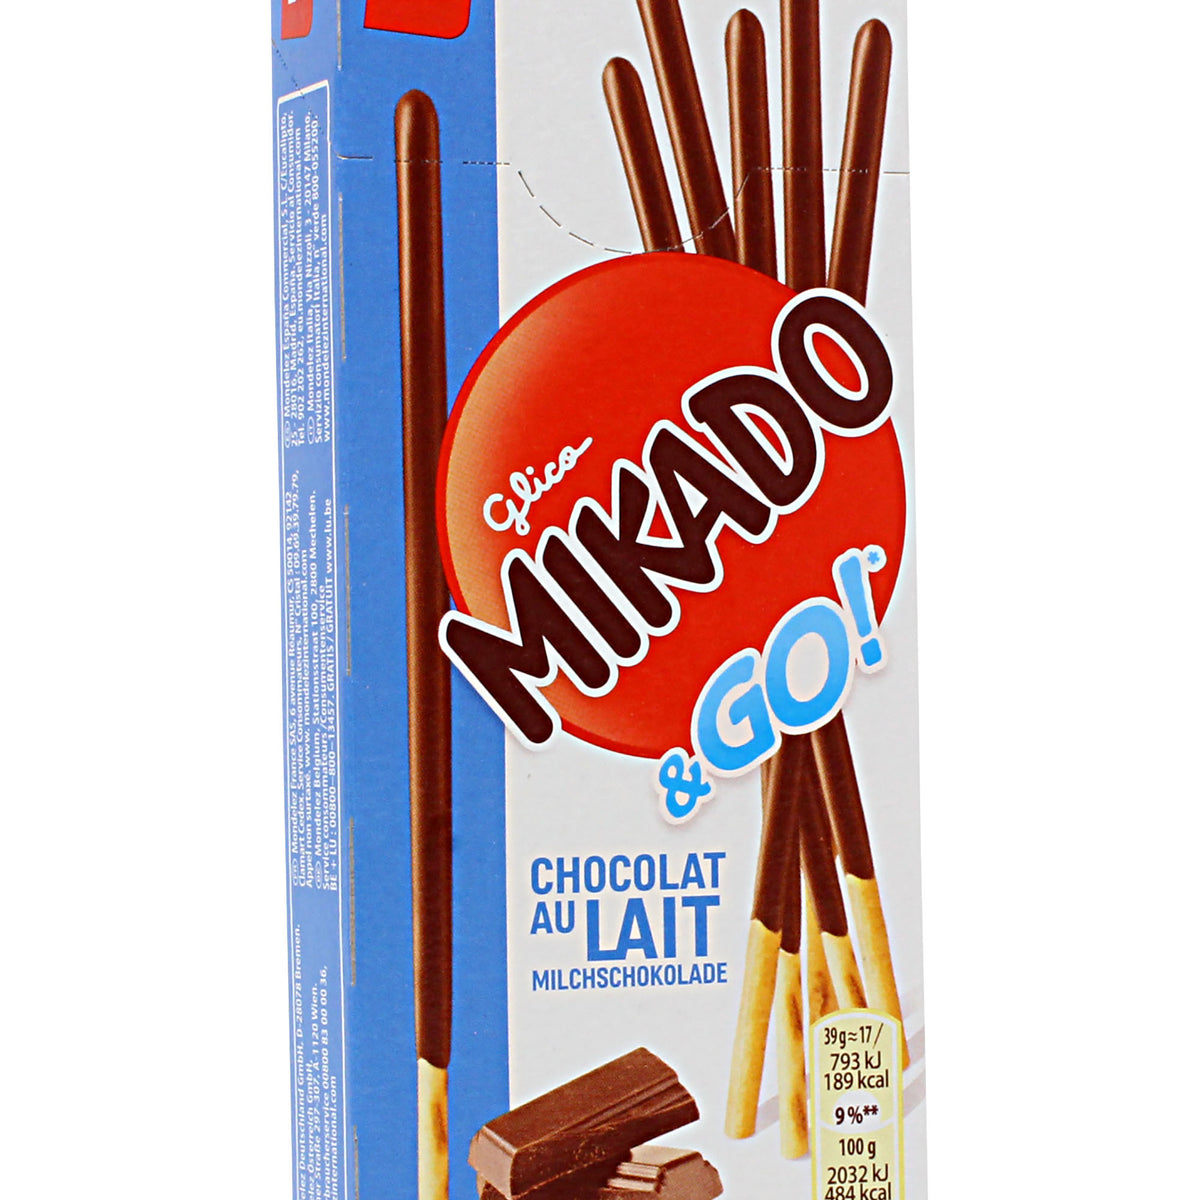 LU Mikado & GO! Milk Chocolate Biscuits - 1.3 oz / 39 g